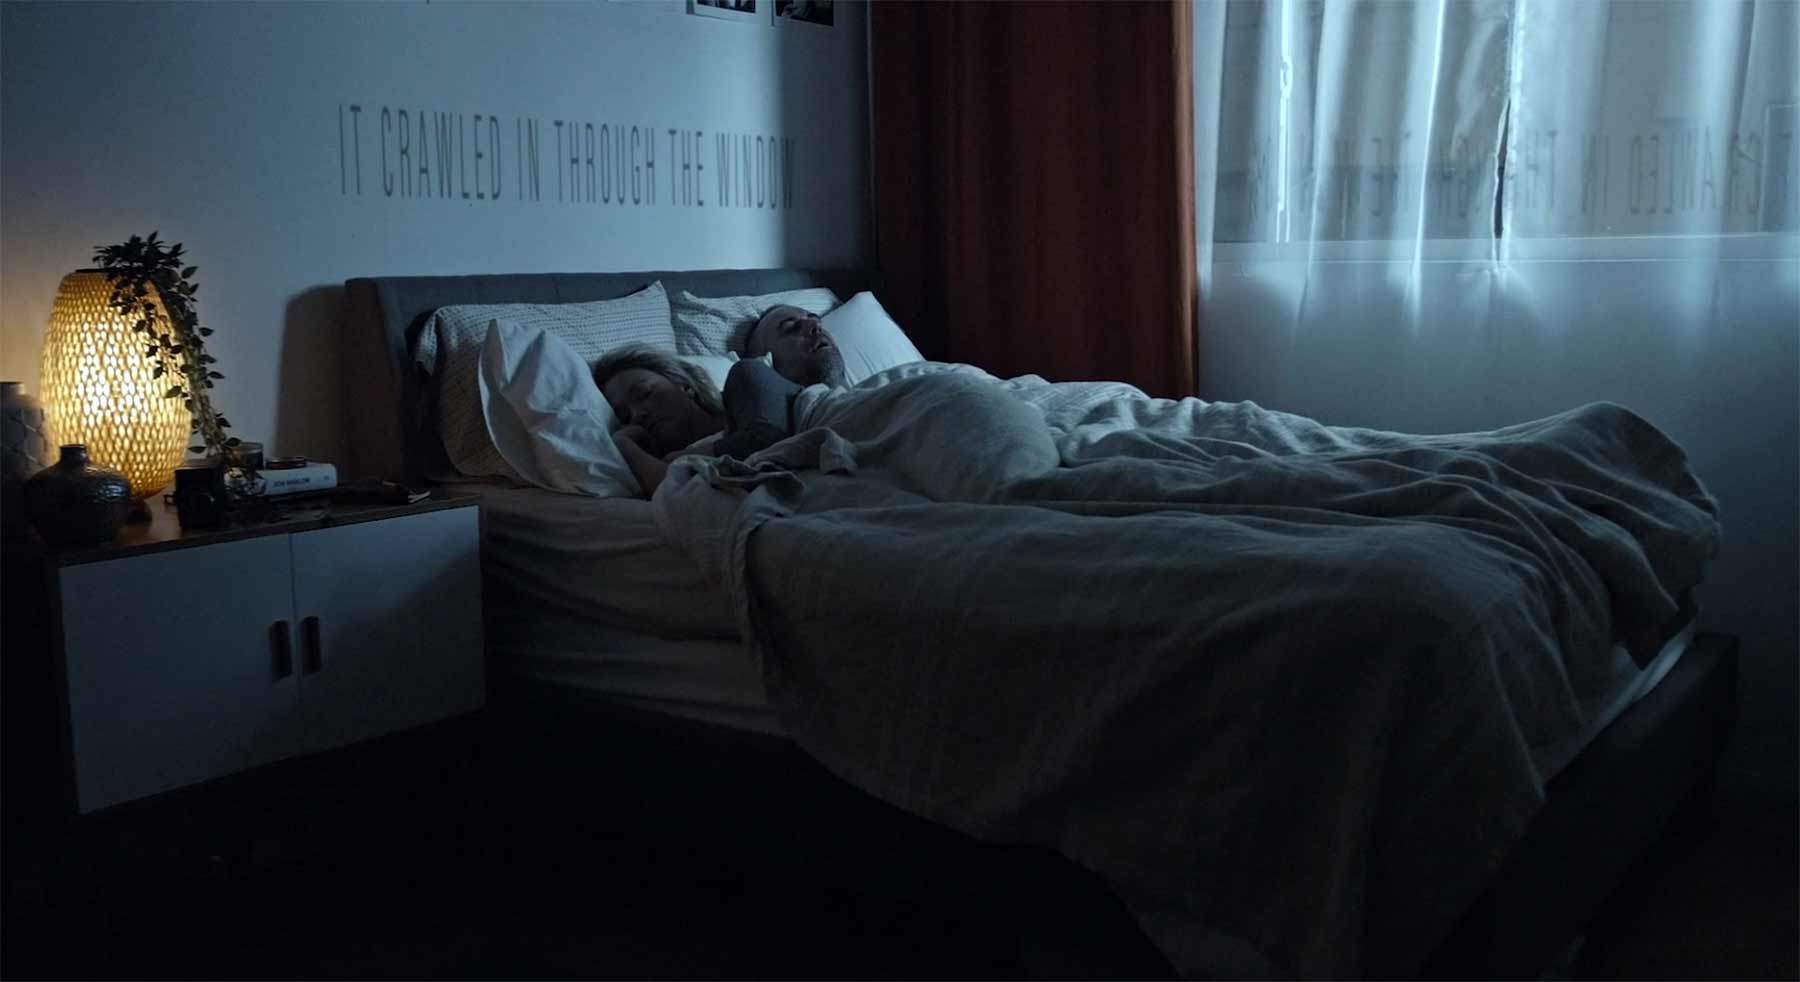 Horror-Kurzfilm: „It Crawled In Through The Window“